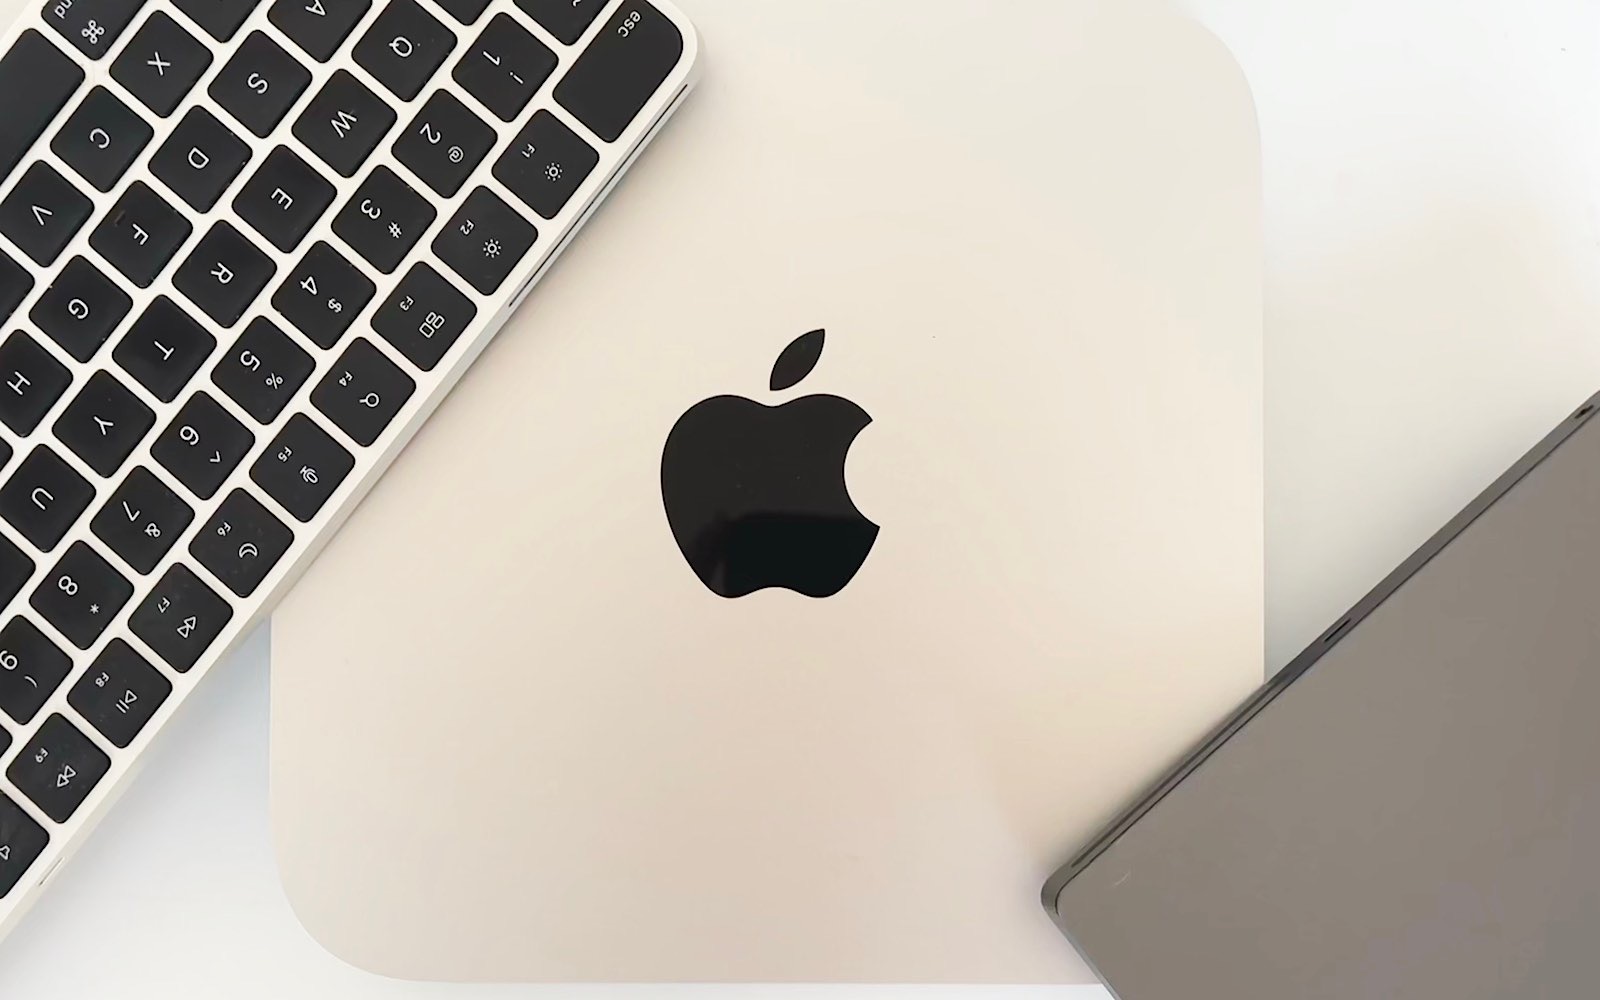 Apple M2 Mac Mini reviewed